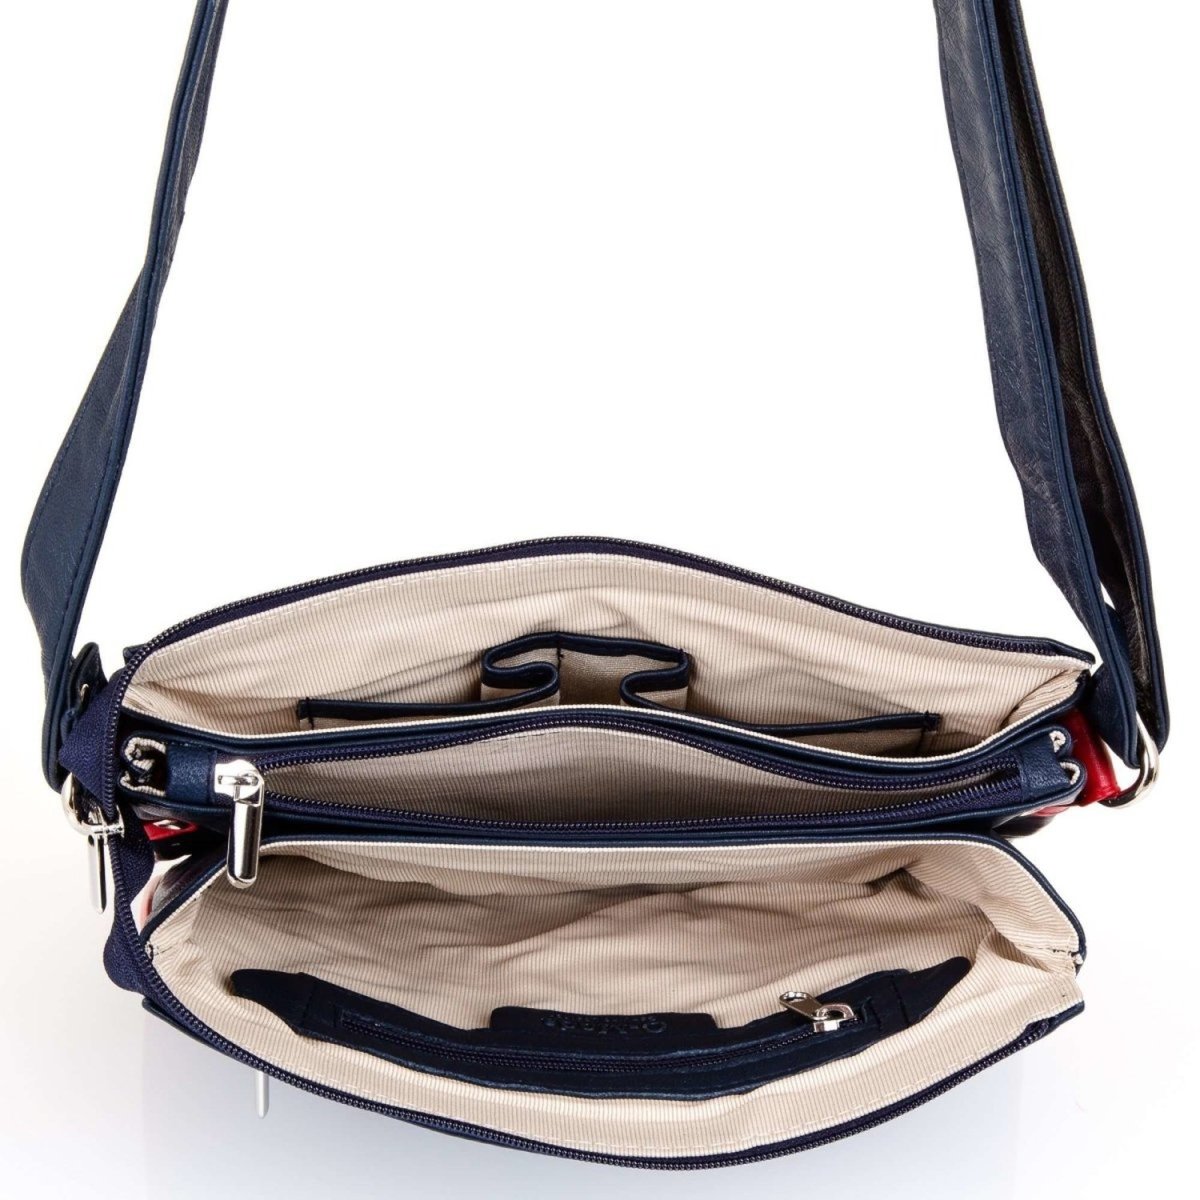 Dublin Unisex Cross Body Bag - Soft Leather Navy Blue / Red Bag - Ozzell London